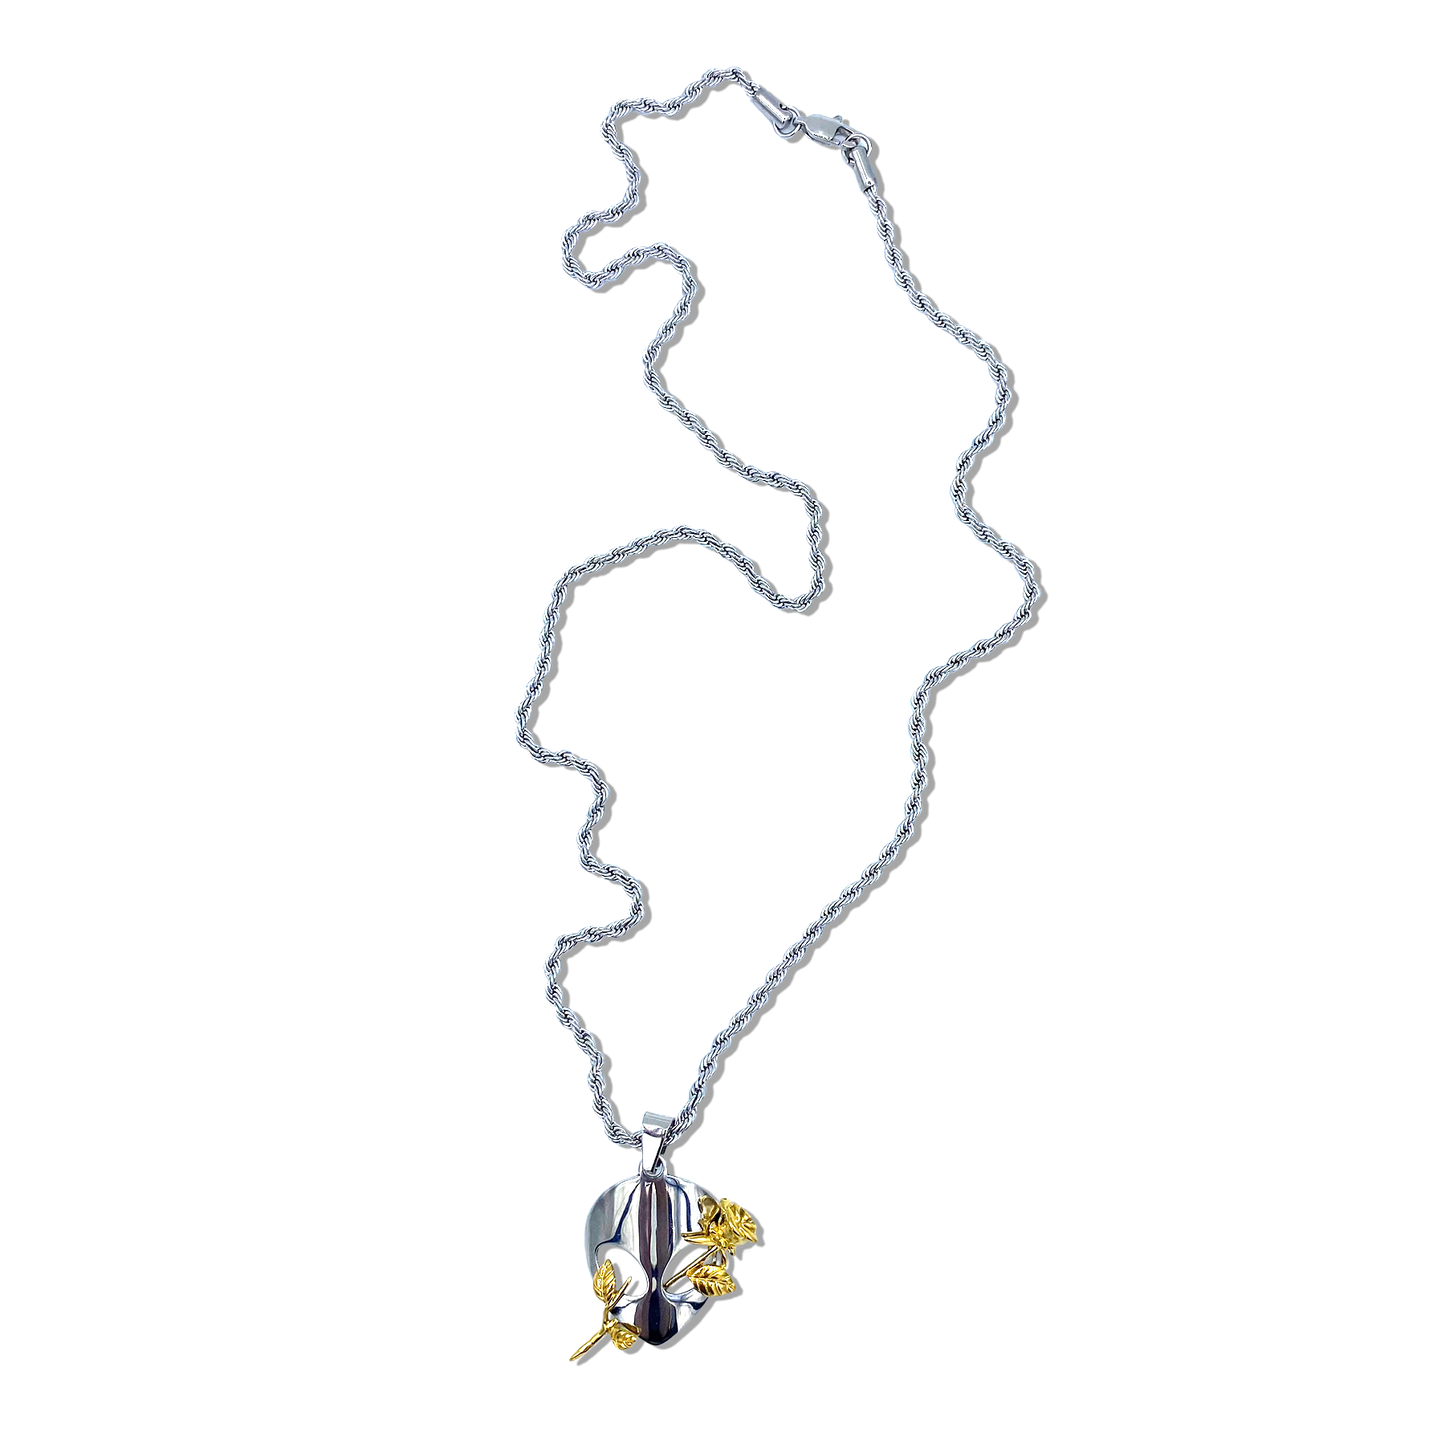 Alien Rose Chain Necklace